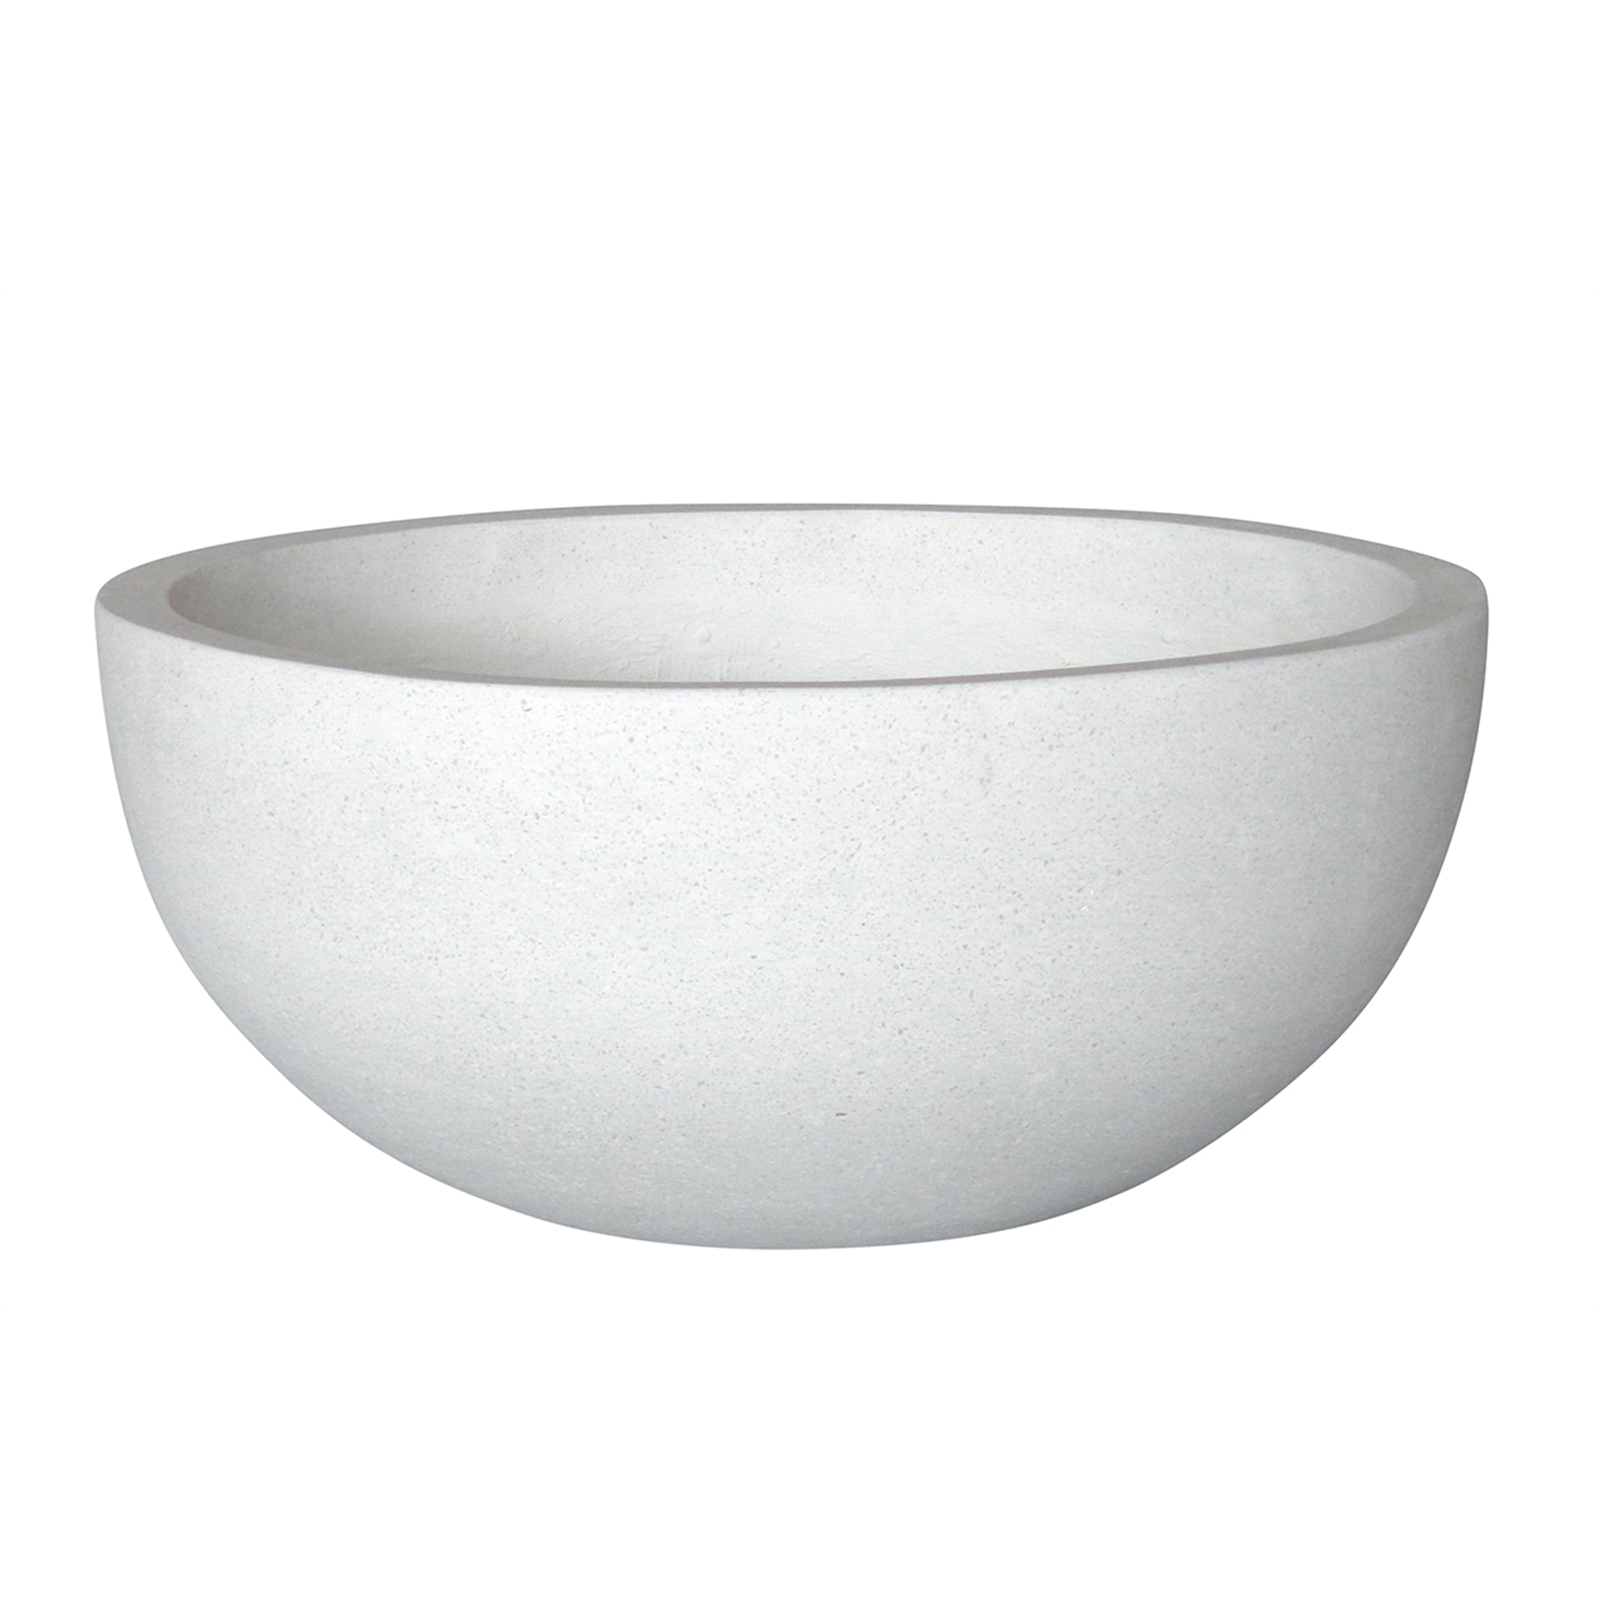 Northcote Pottery White Precinct Lite Omni Bowl - Small